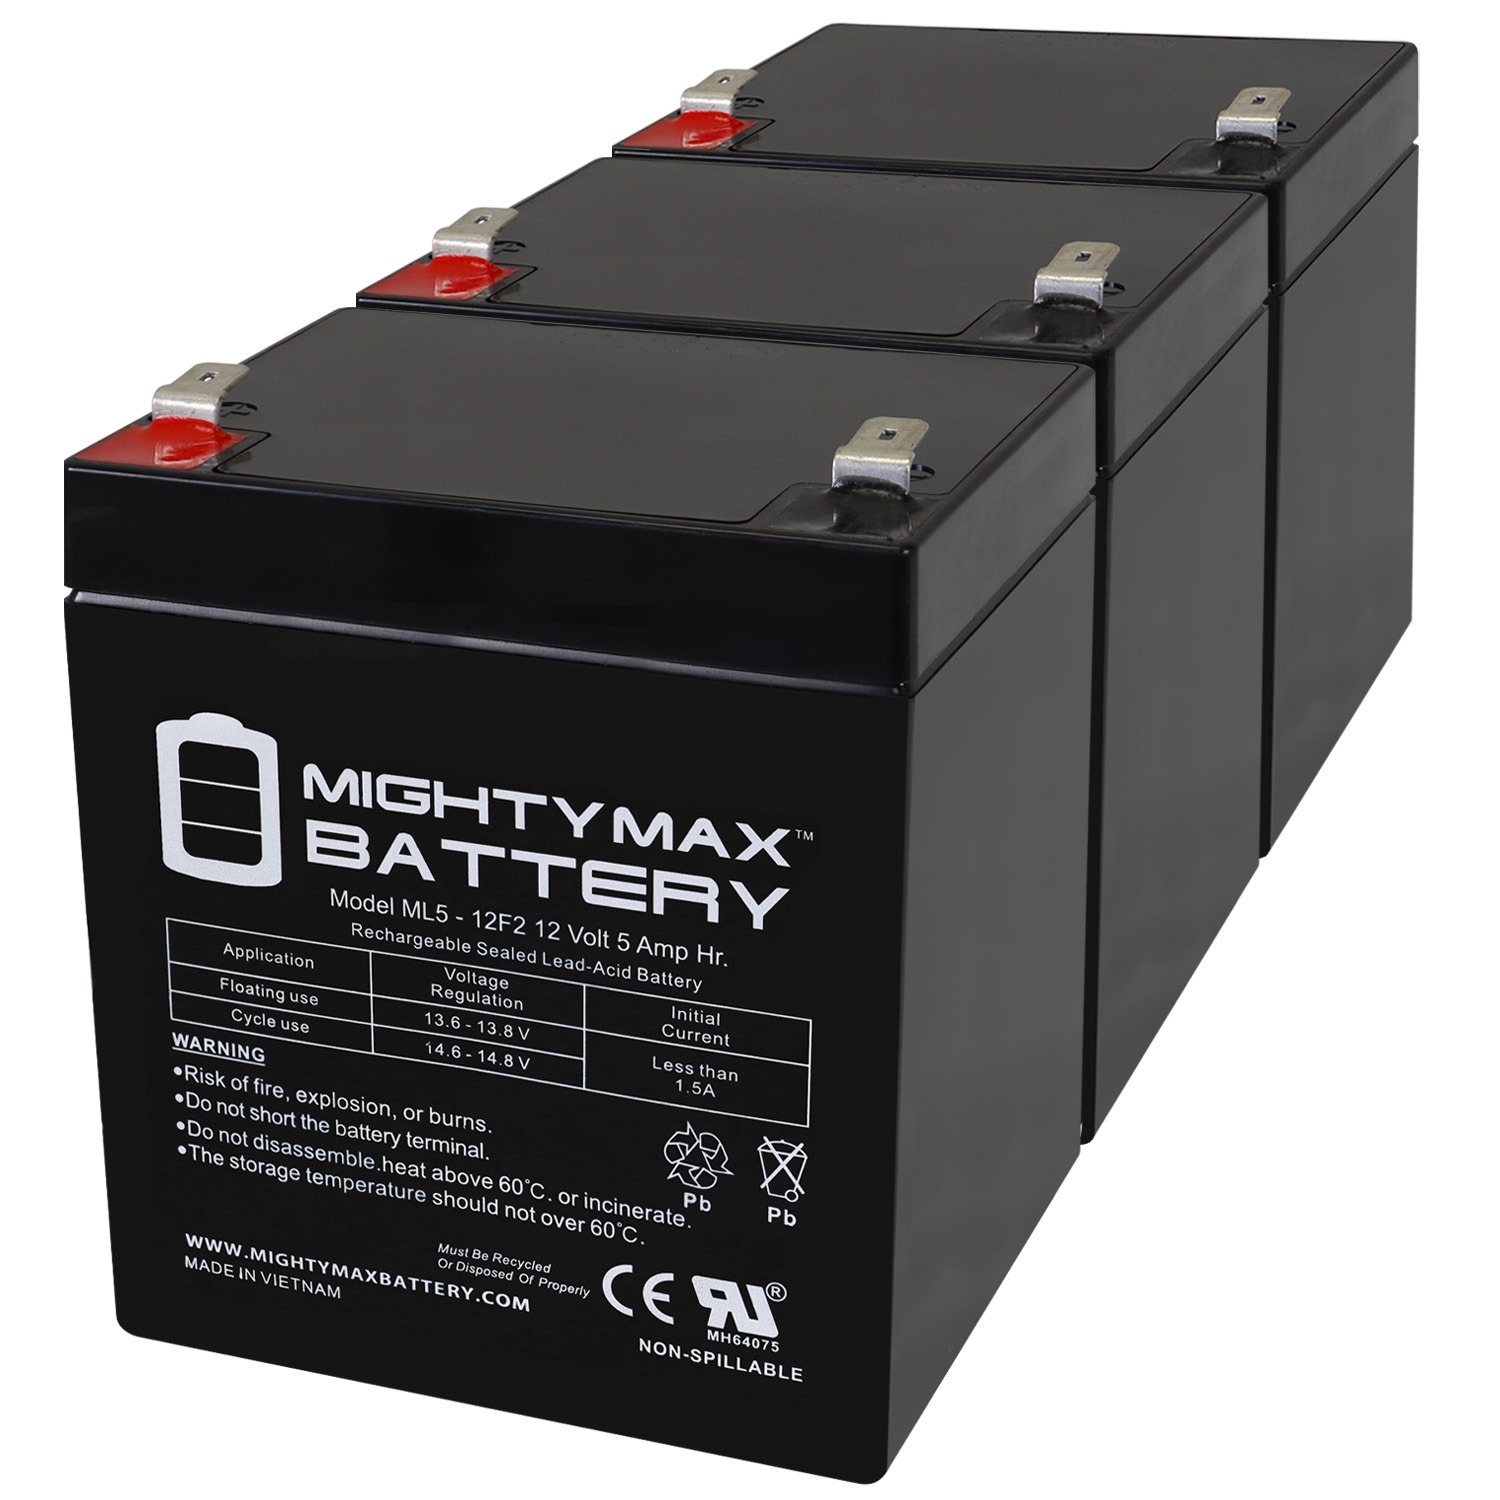 12V 5Ah F2 SLA Replacement Battery for Teledyne Big Beam Light - 3 Pack